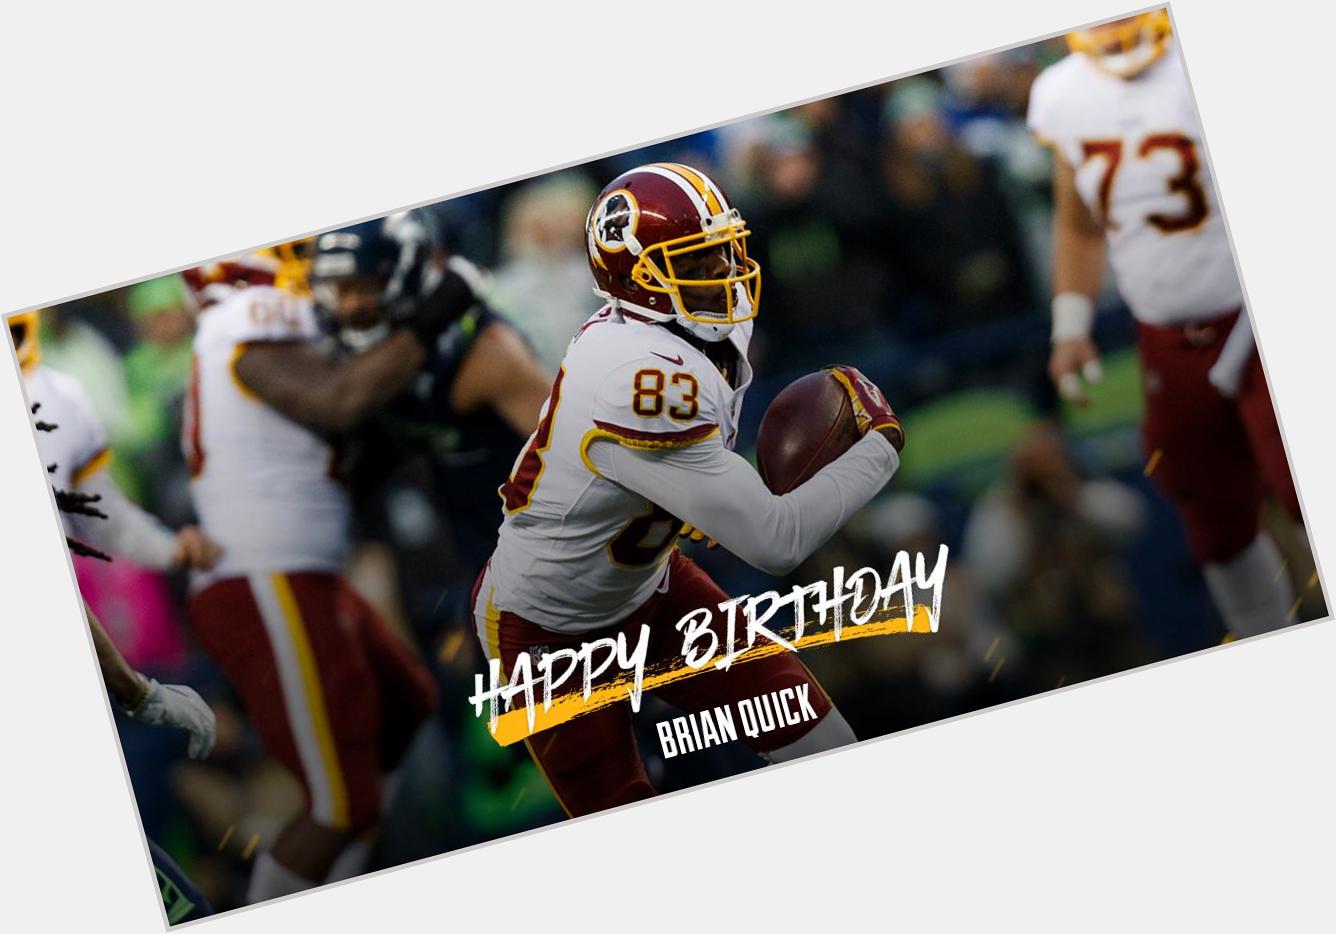 Wishing WR Brian Quick a happy birthday! 